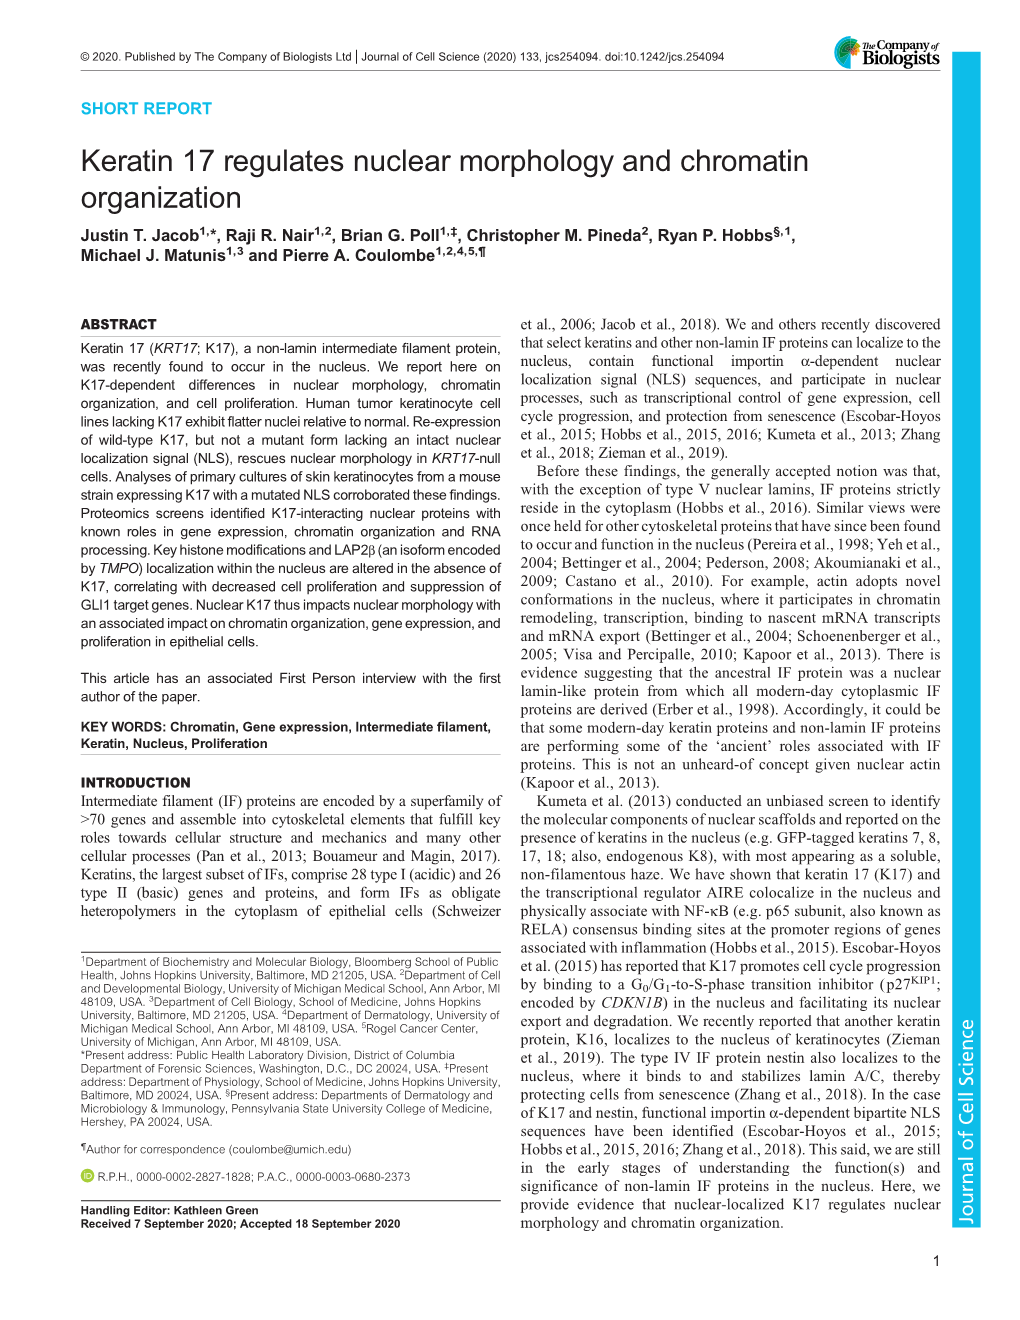 Keratin 17 Regulates Nuclear Morphology and Chromatin Organization Justin T